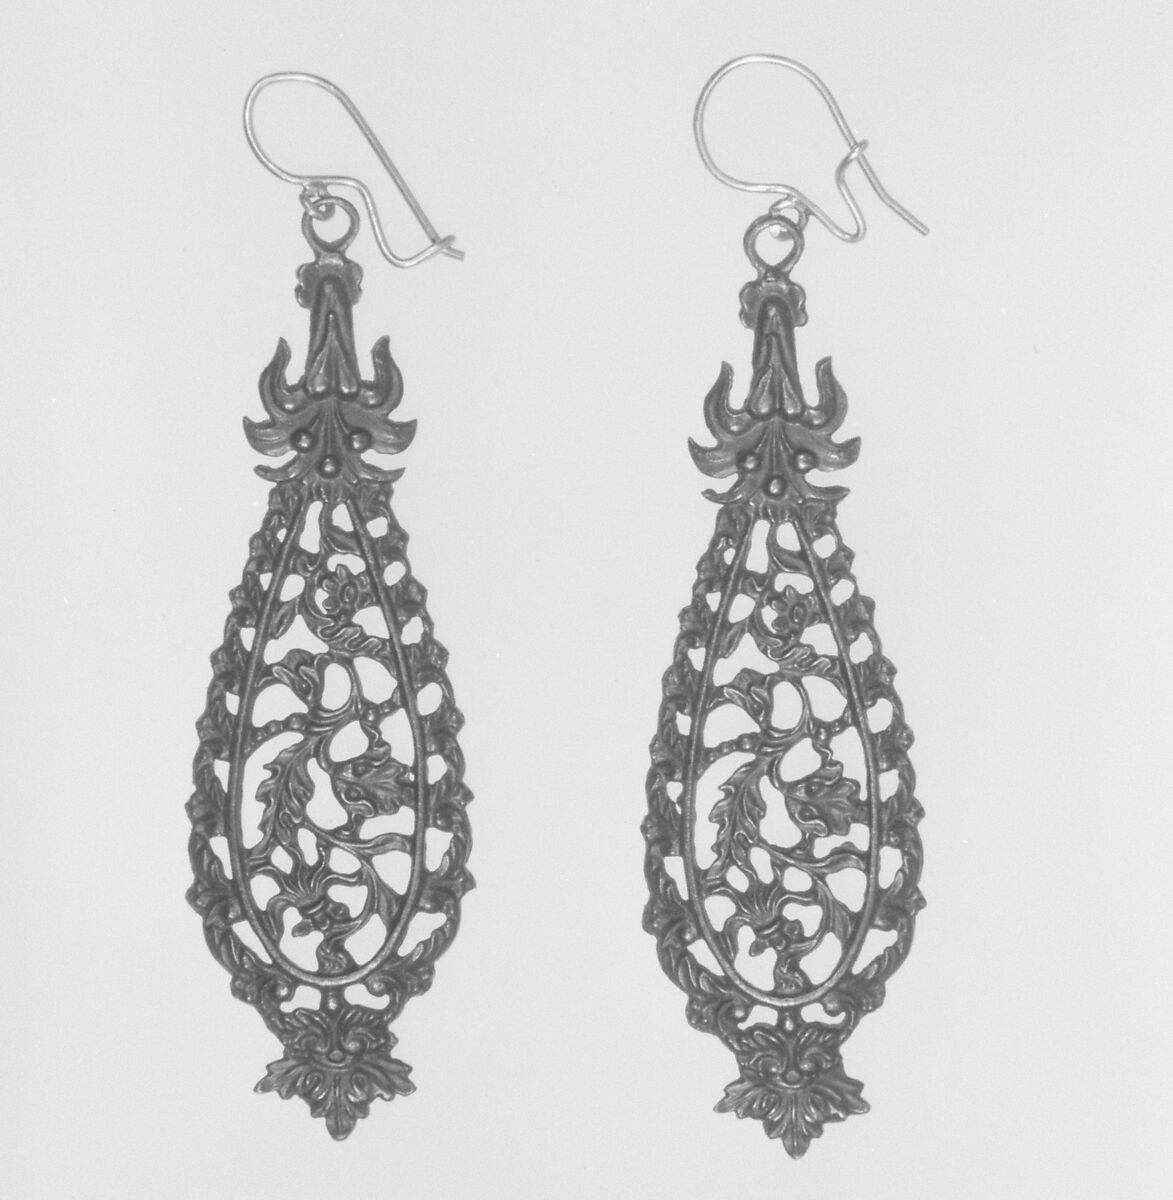 Pair of earrings (part of a set), Iron, German 